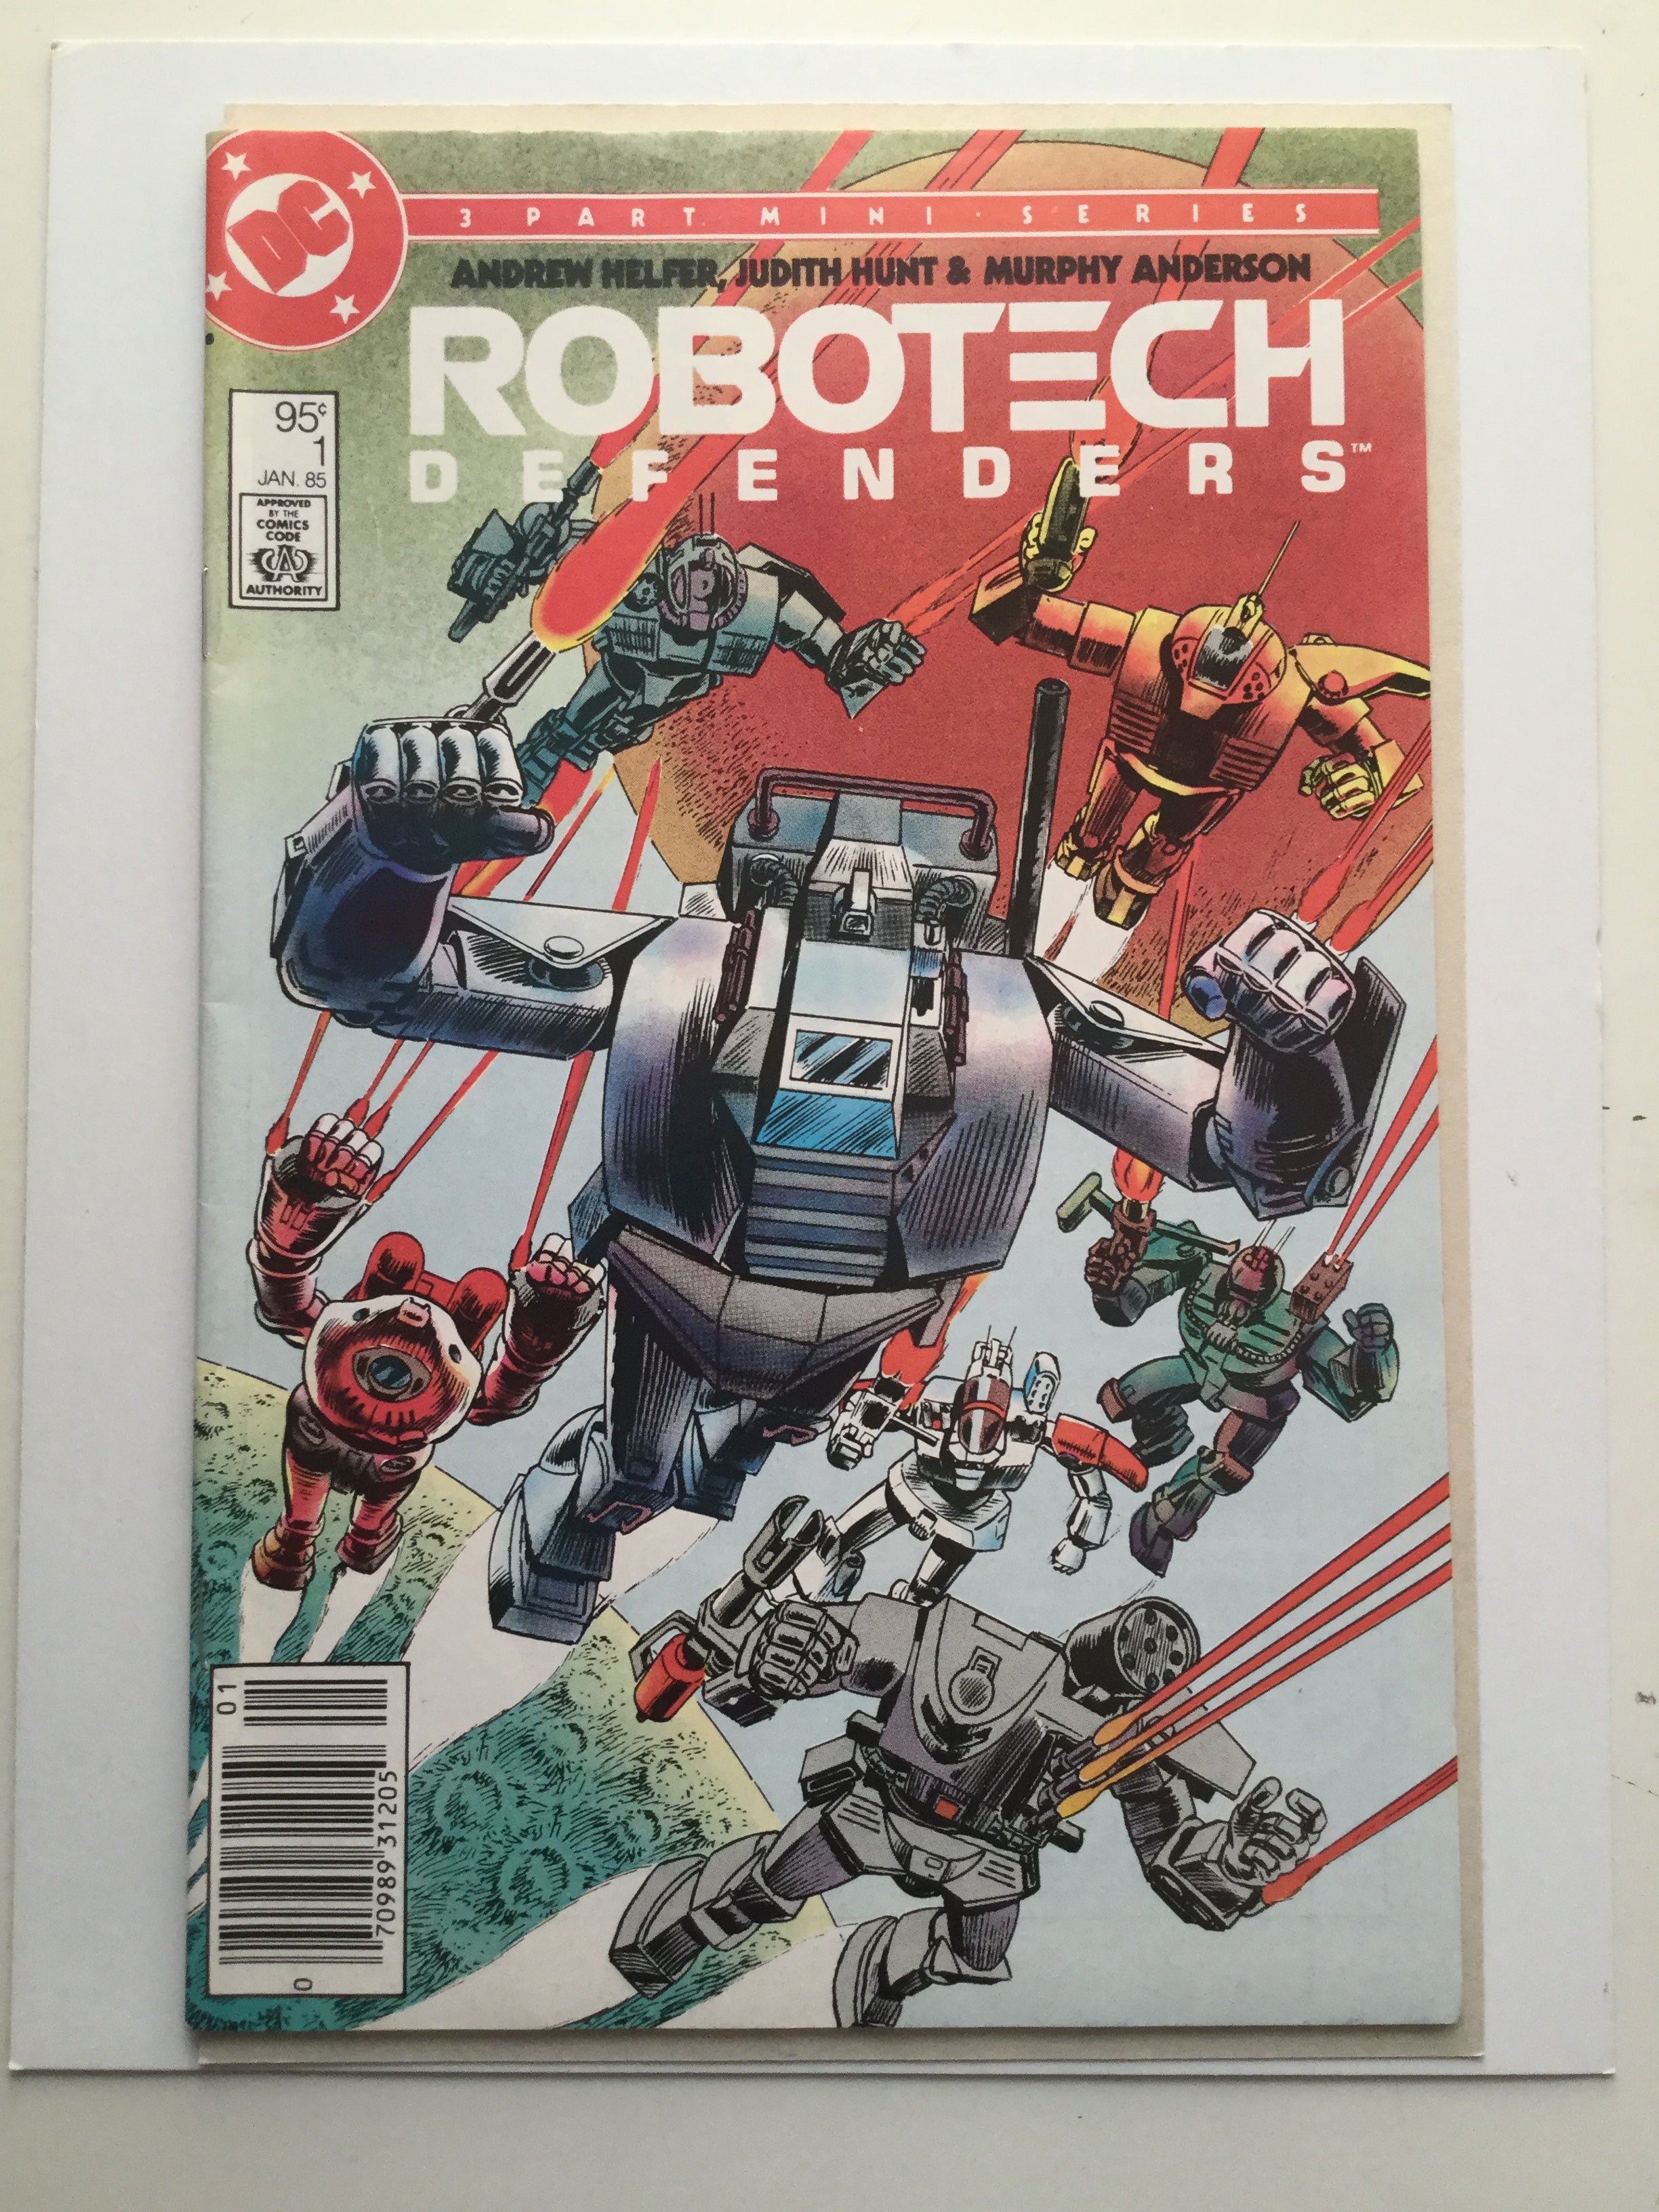 Robotech Defenders #1 high grade comic book